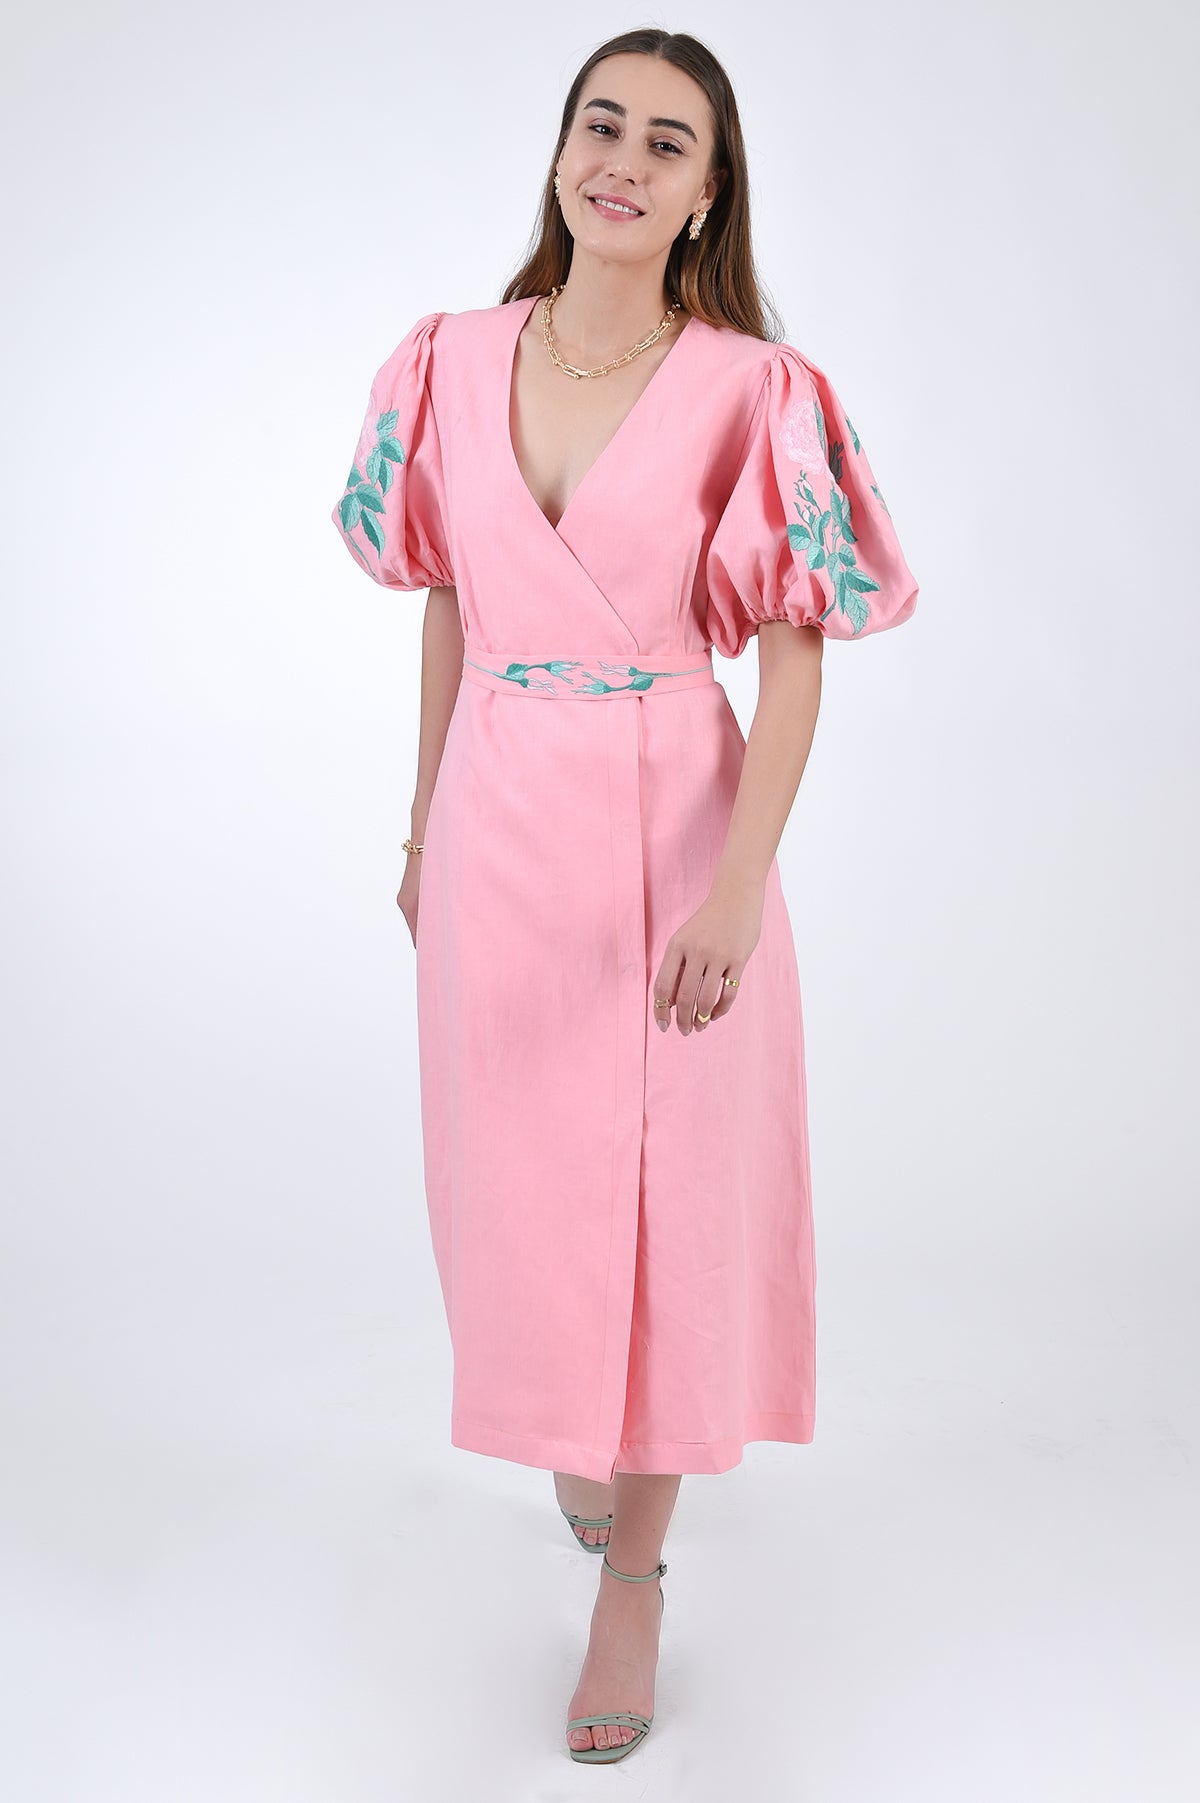 Luti Linen Wrap Dress in Geranium Pink, Front View.